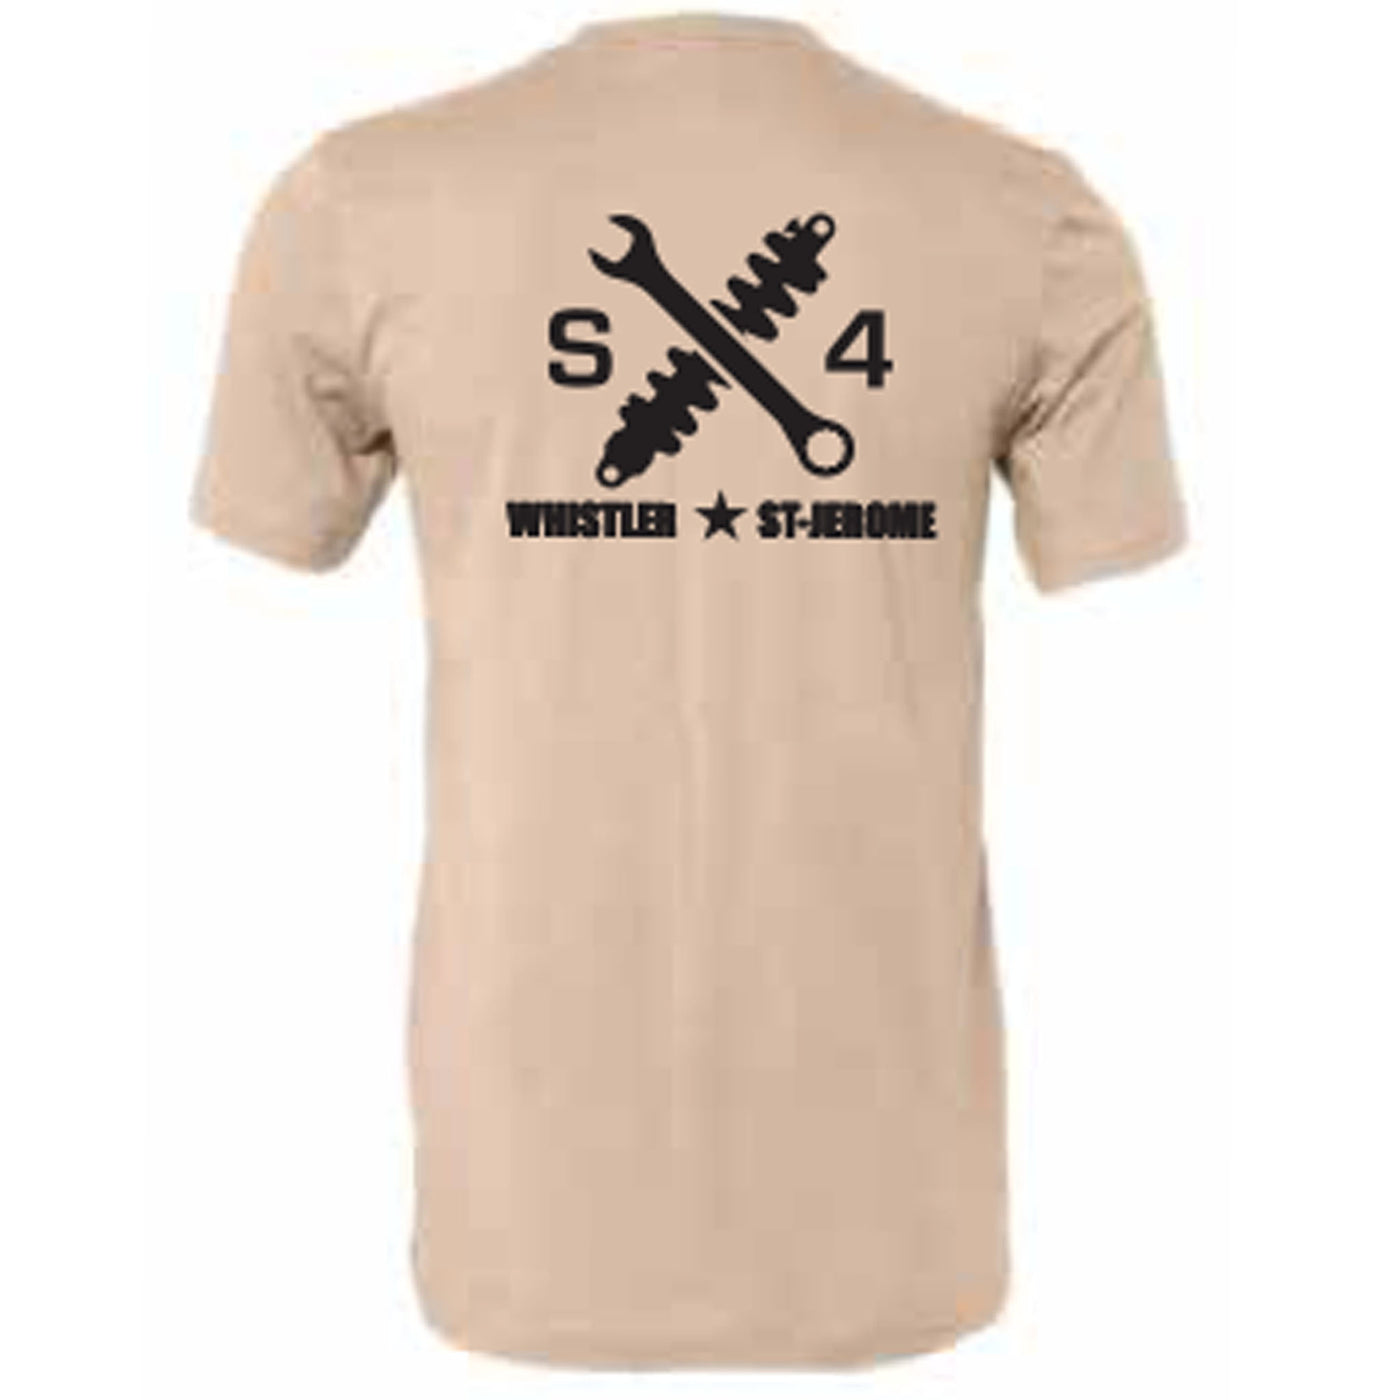 S4 Cowboy Boss T-Shirts